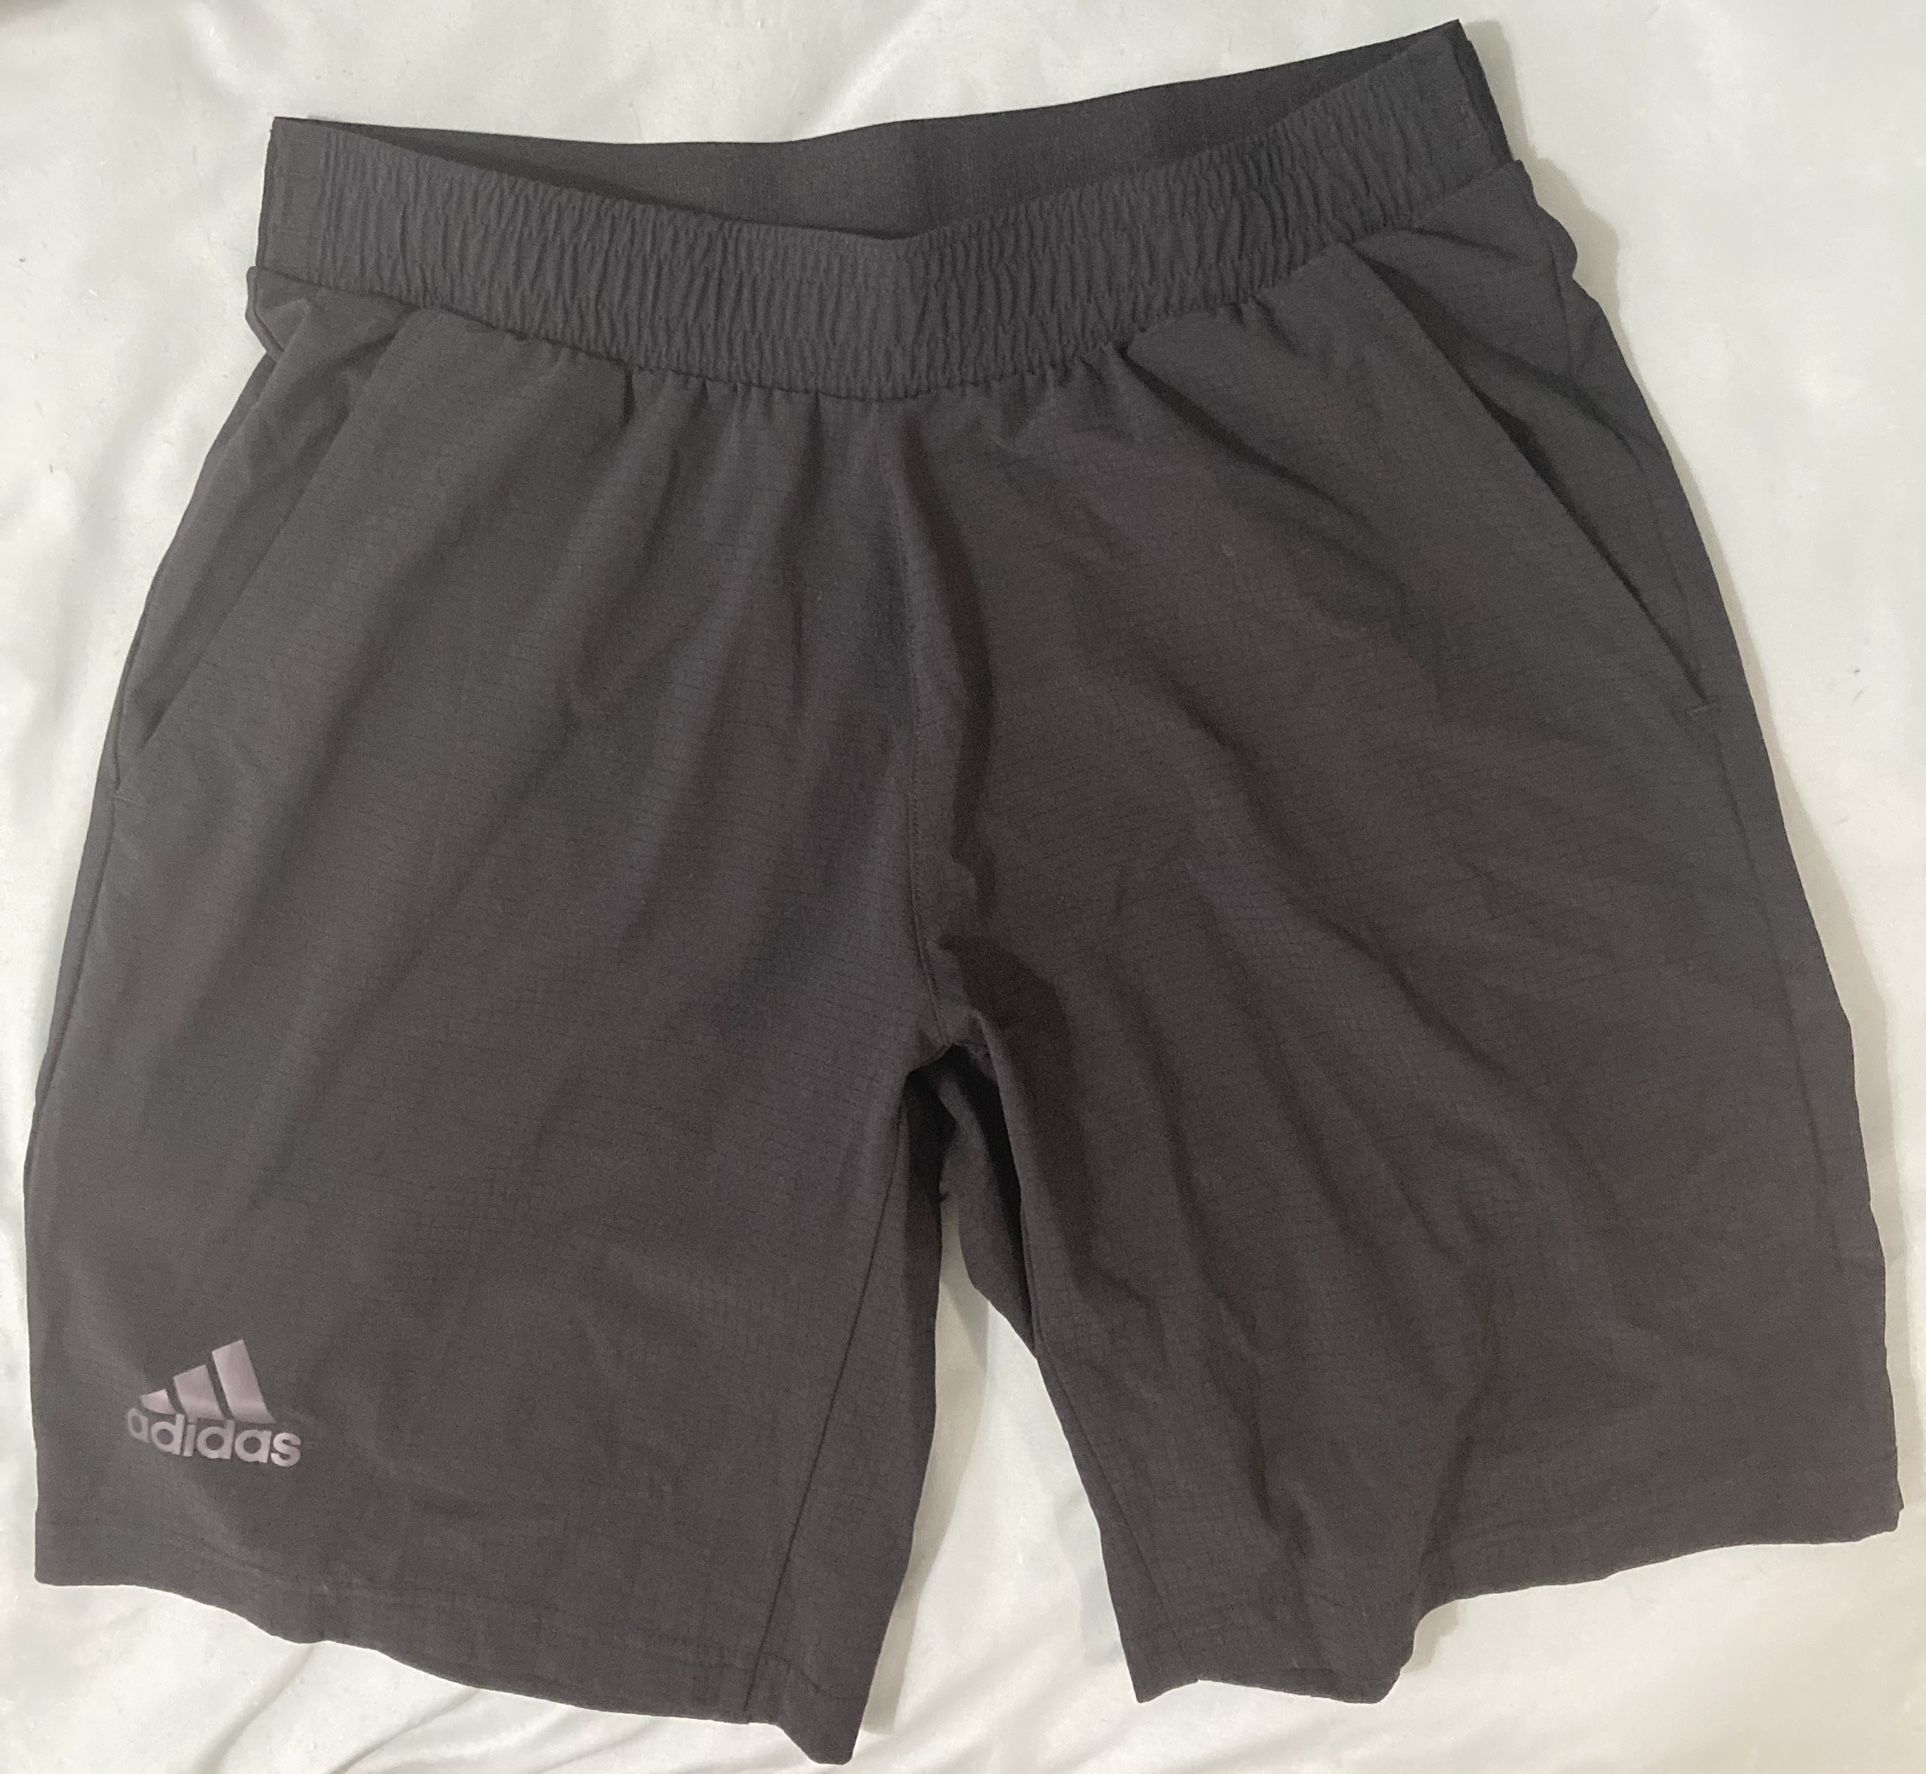 Adidas Athletic Shorts - Mens - Regular Fit - Small